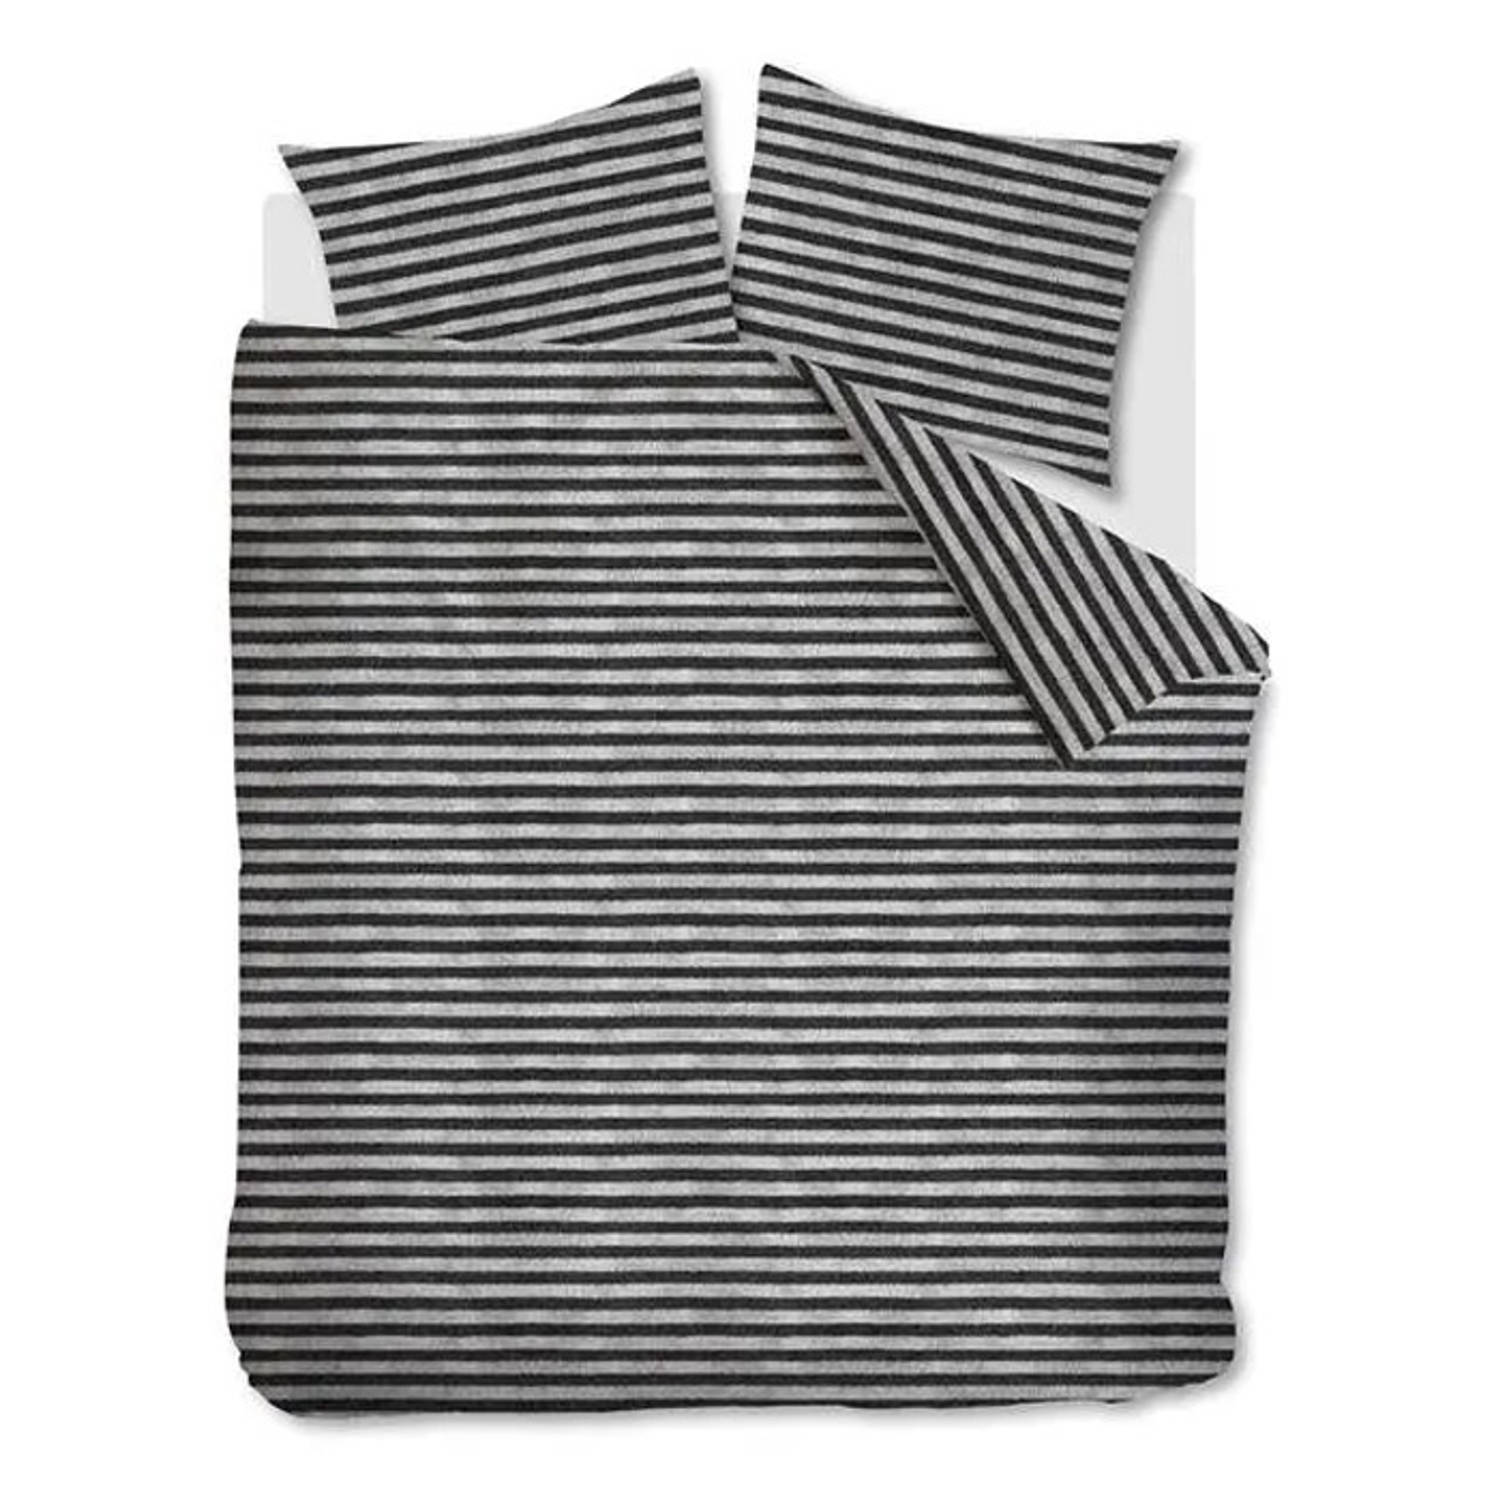 Ariadne at Home Knit Stripes Dekbedovertrek 140 x 200-220 cm Zwart-Wit